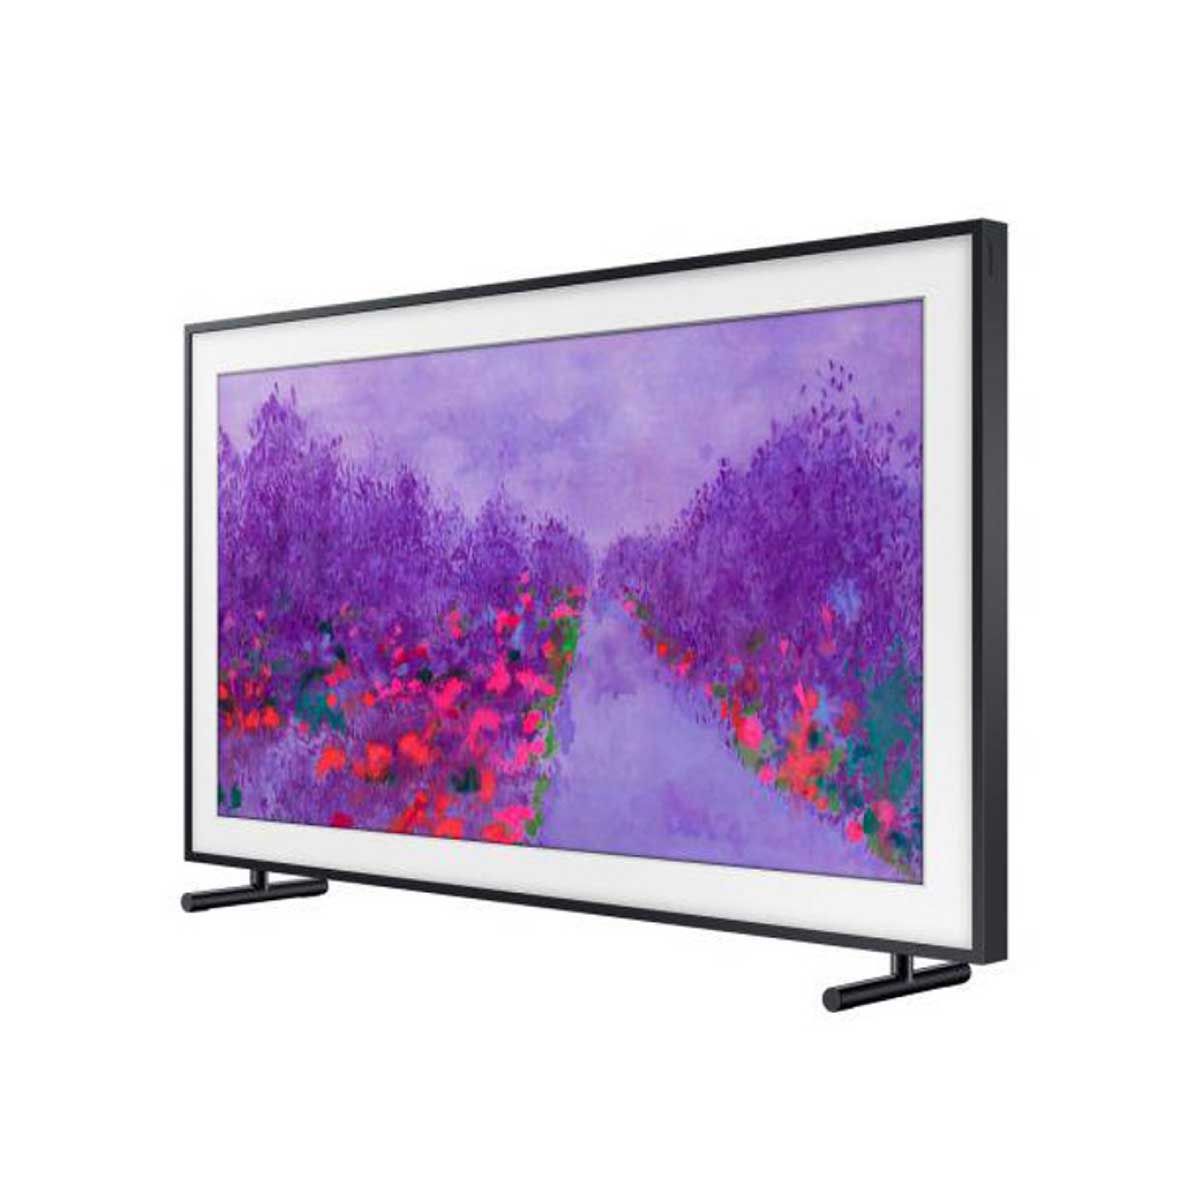 SAMSUNG The Frame Lifestyle UHD 4K Smart TV  รุ่น UA55LS03NAK สมาร์ททีวี